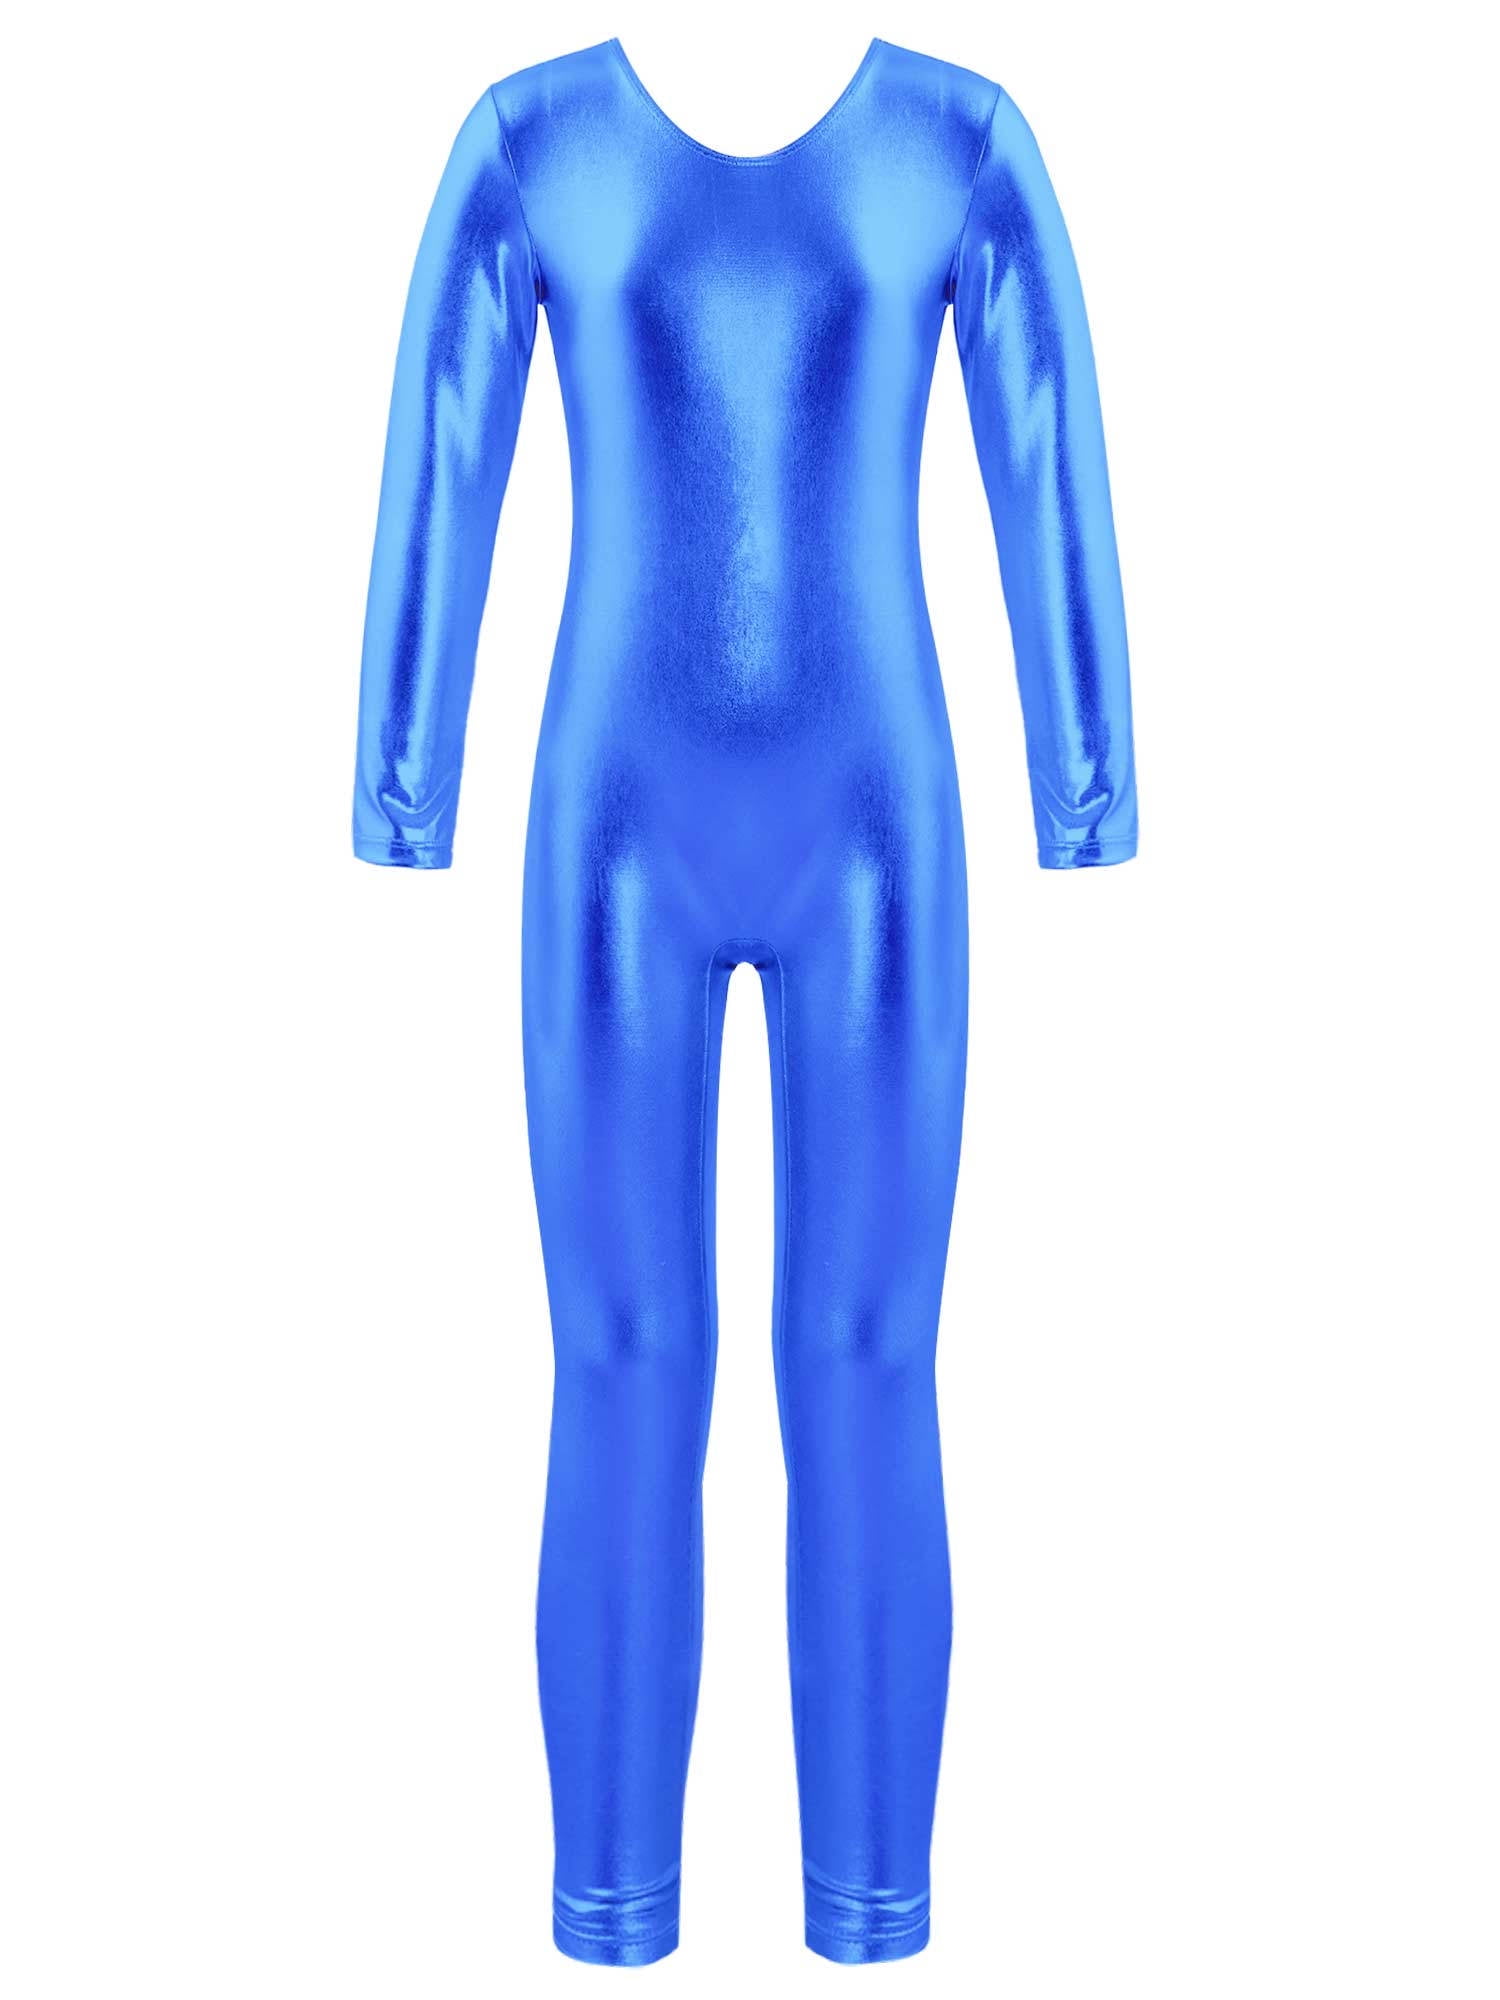 Shiny Metallic Unitard Bodysuit Catsuit Spandex One piece Lycra